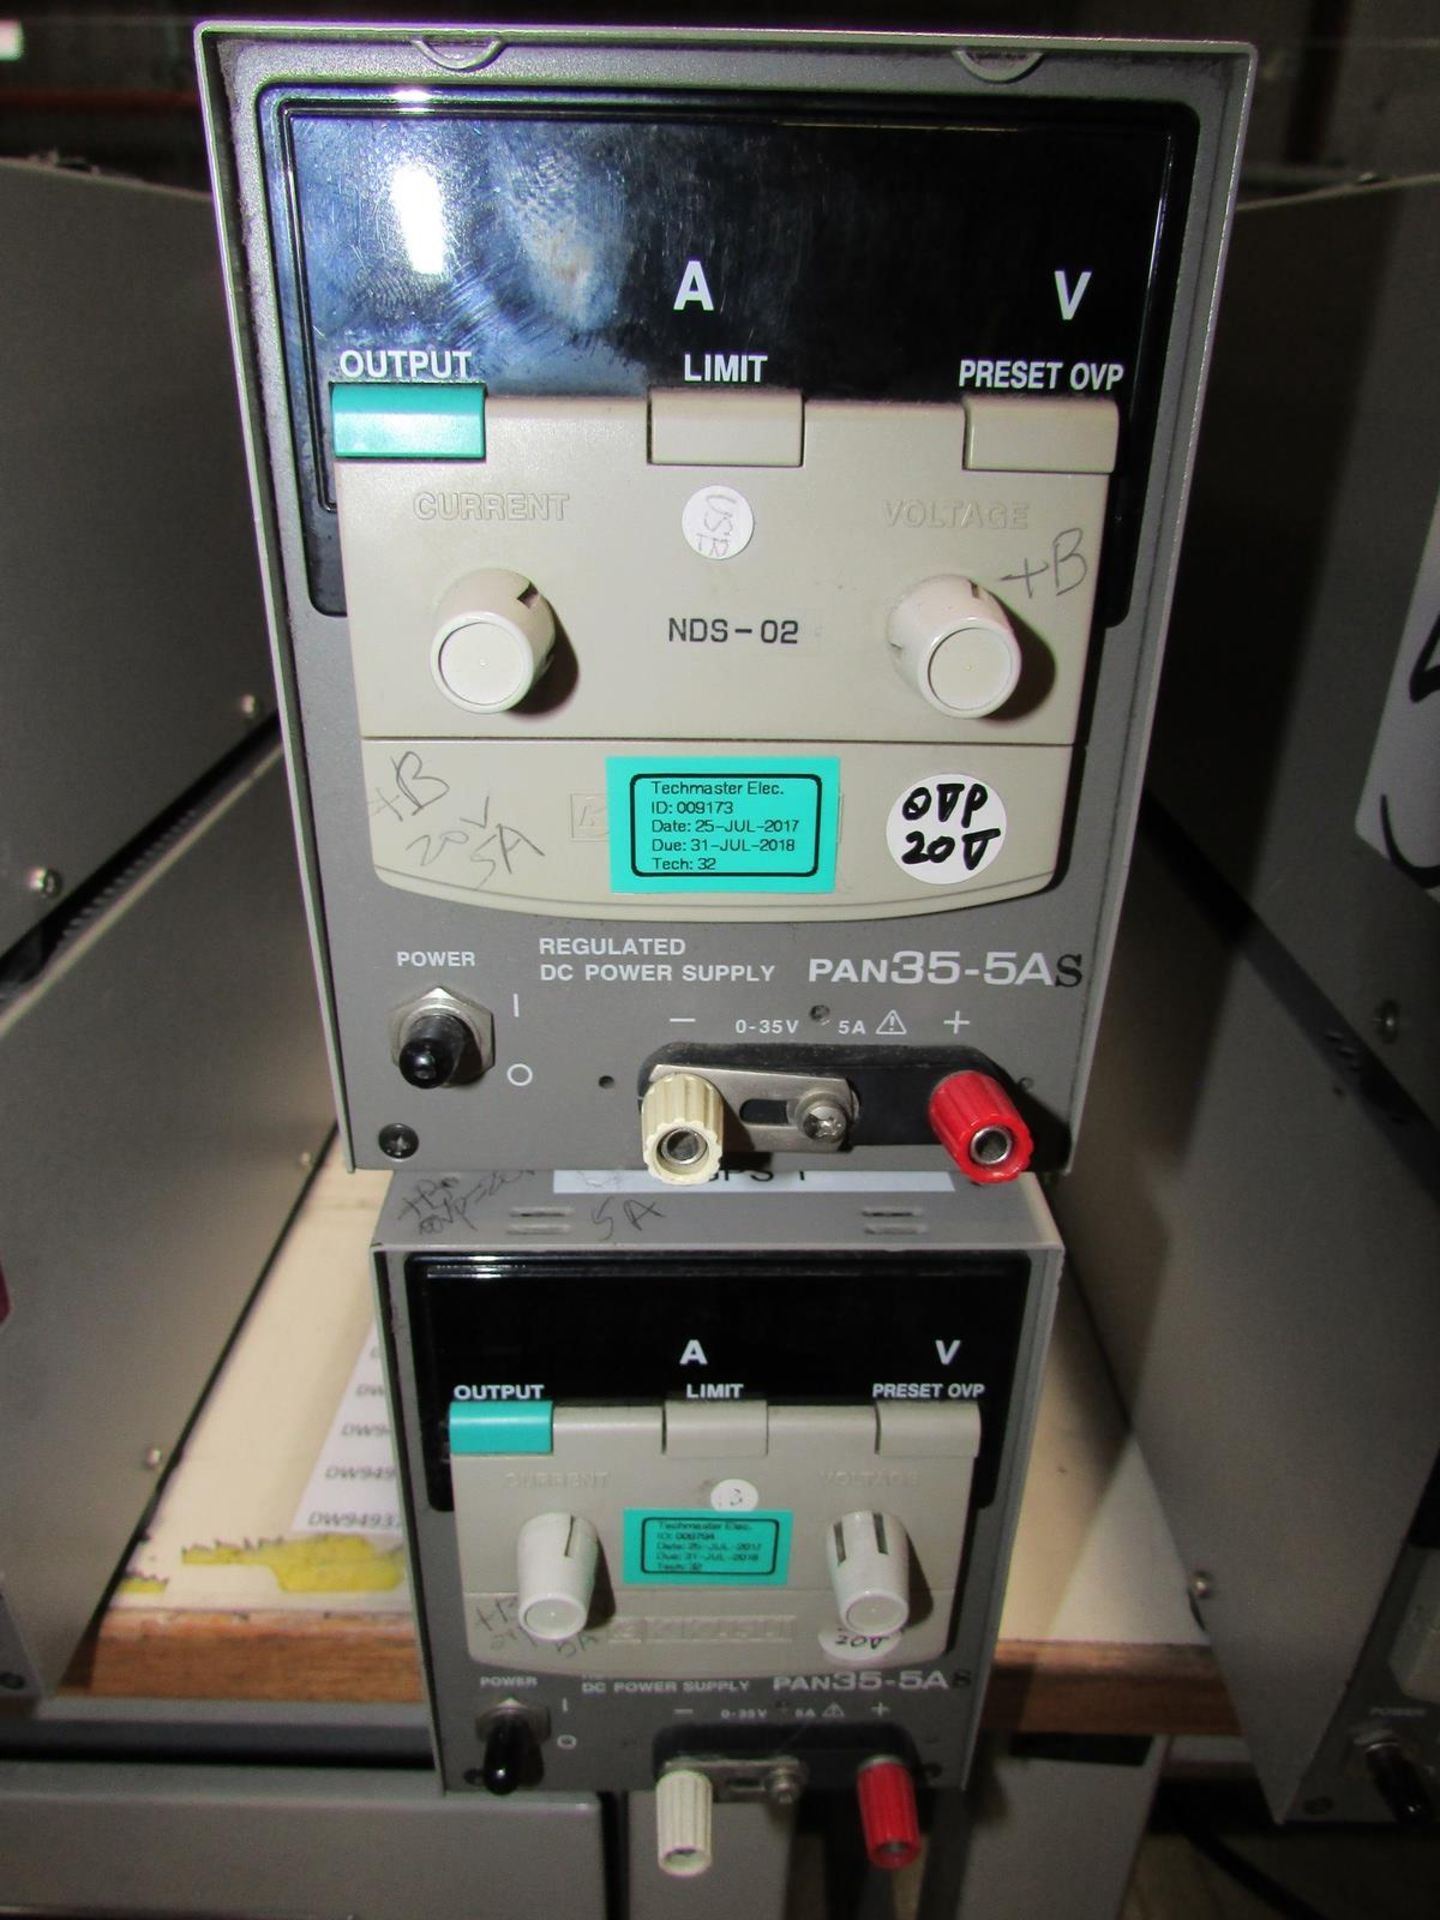 Kikusui Electronics Co. PAN35-5A Regulated DC Power Supplies - Image 2 of 3